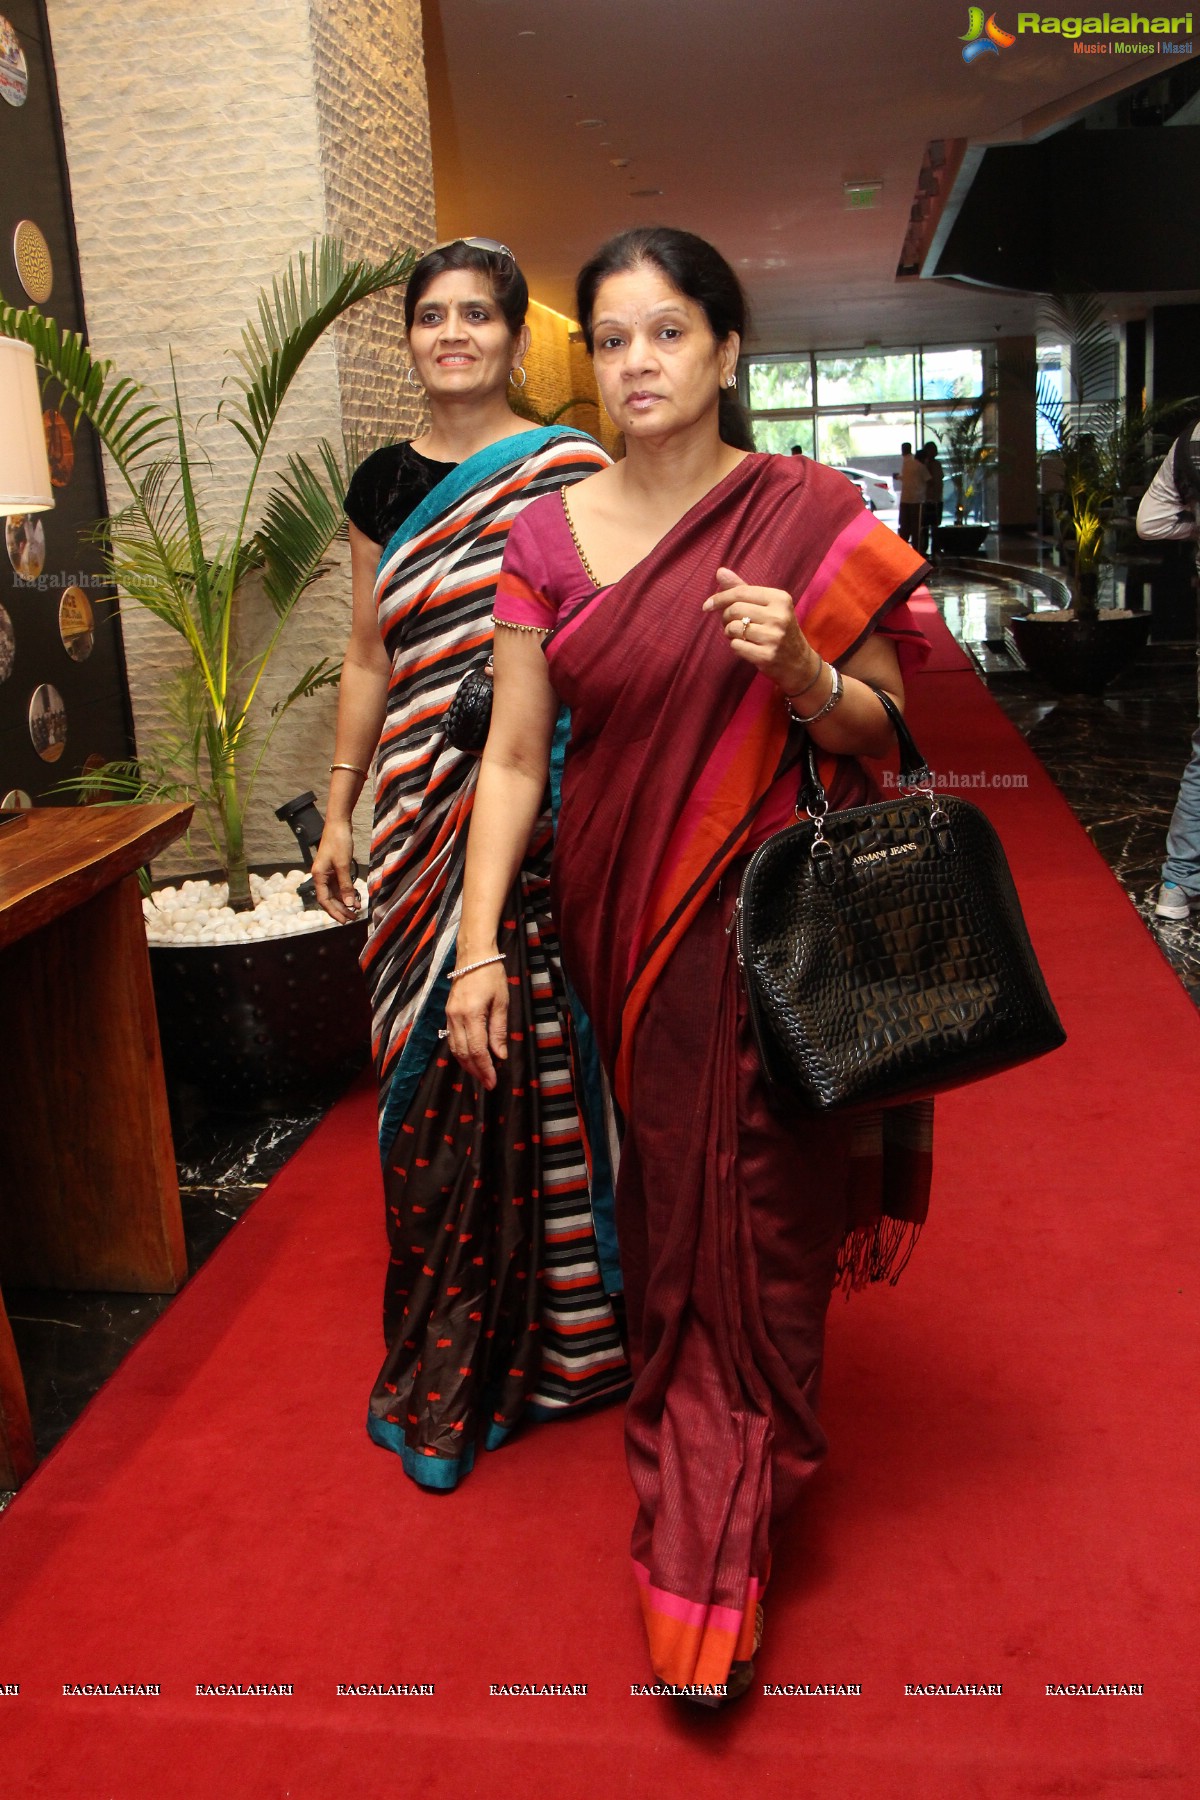 FICCI Ladies Organisation Interactive Session with Actress Vidya Balan